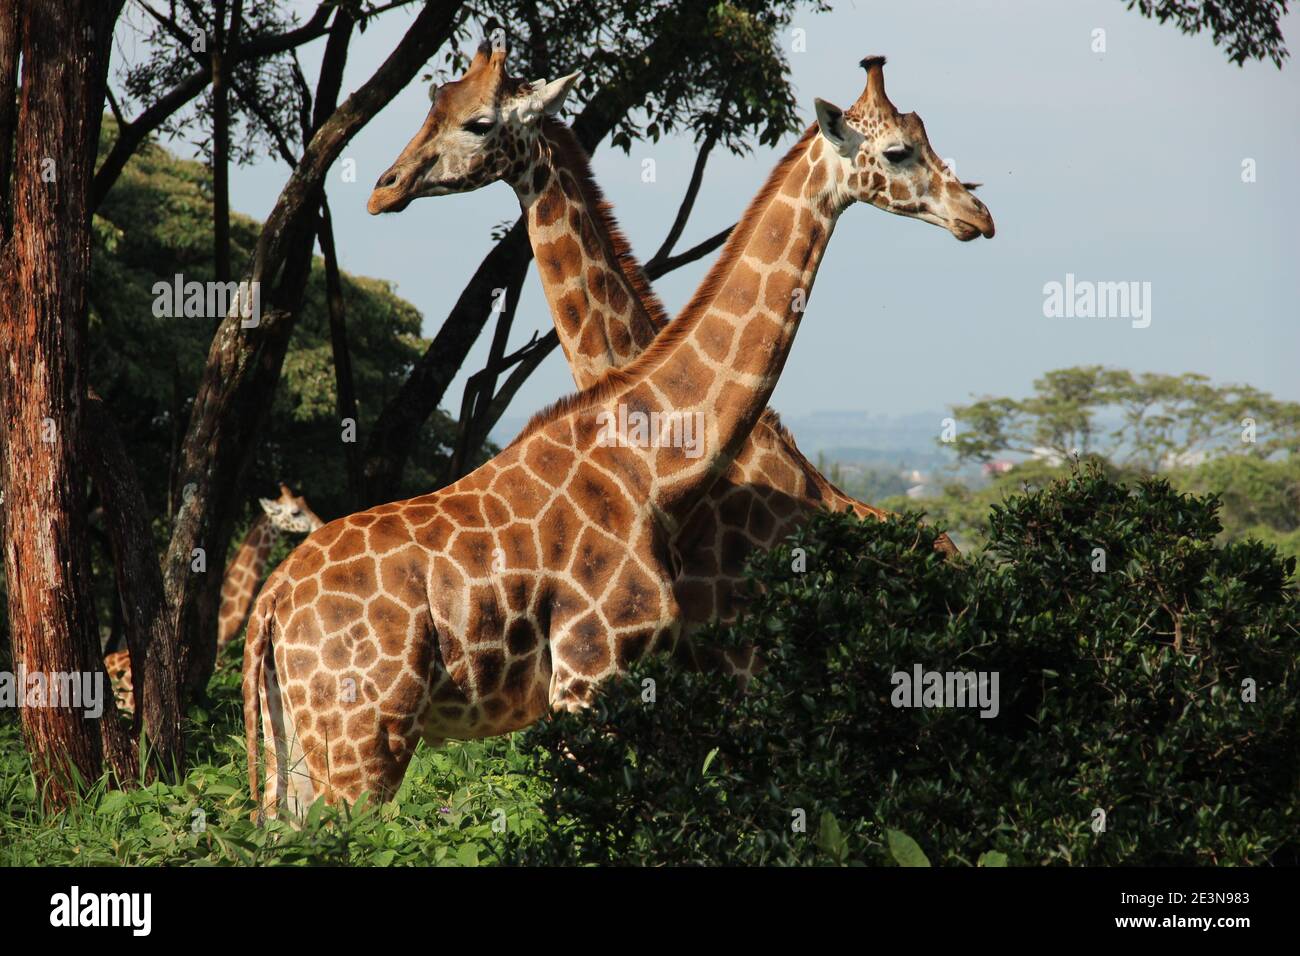 Two Rothschild giraffes at the Giraffe Centre in Nairobi, Kenya Stock Photo